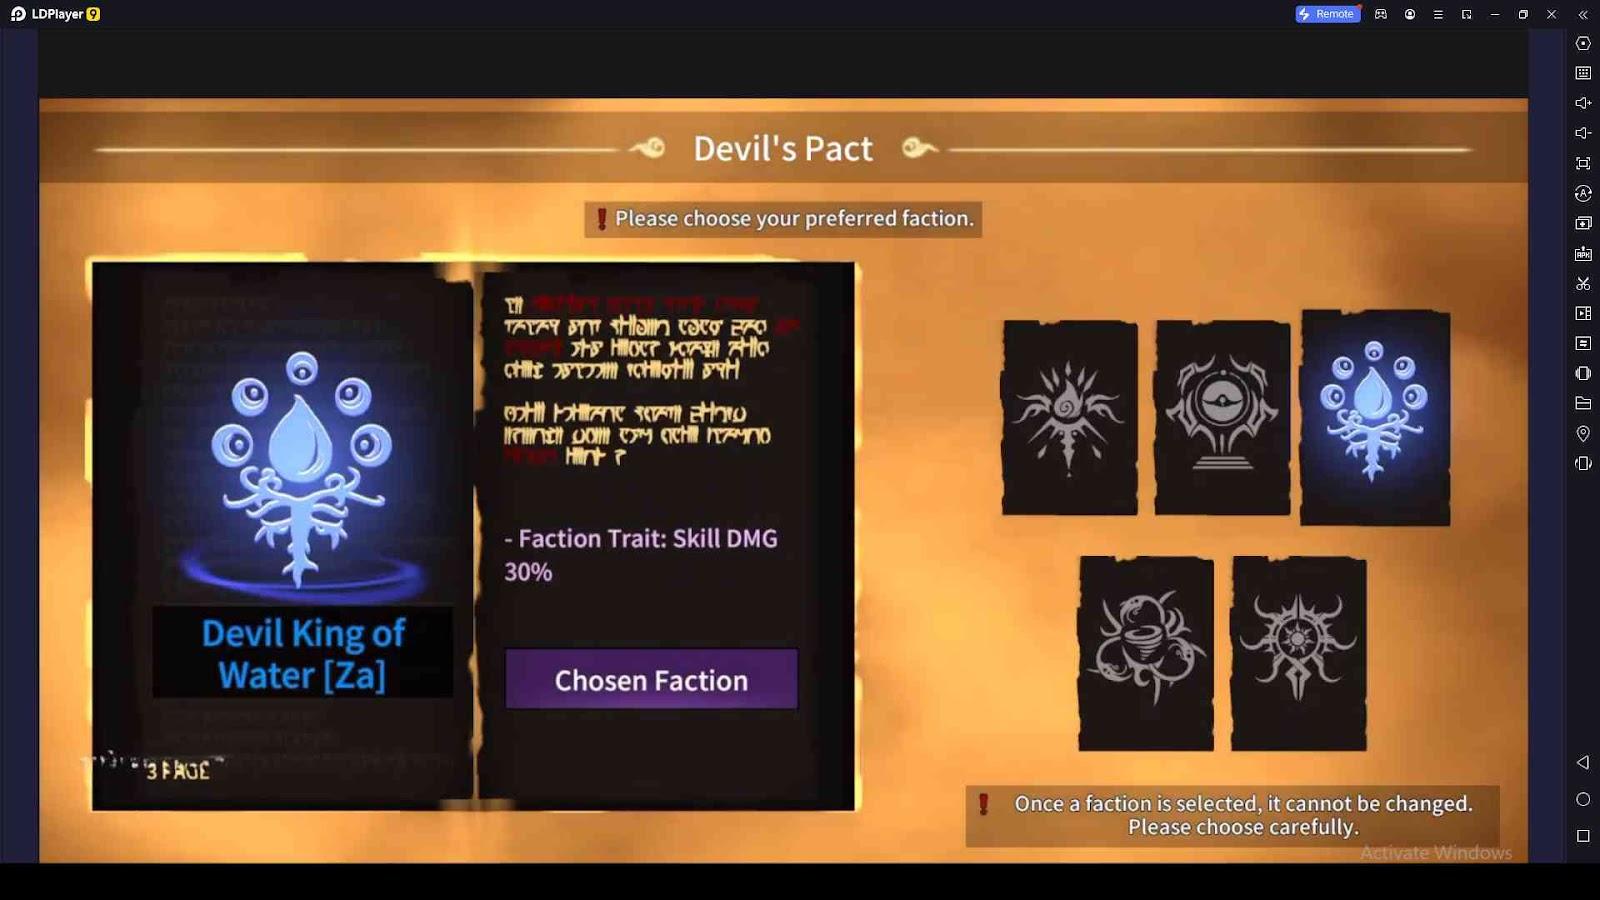 Choose Your Favorite Devil Faction